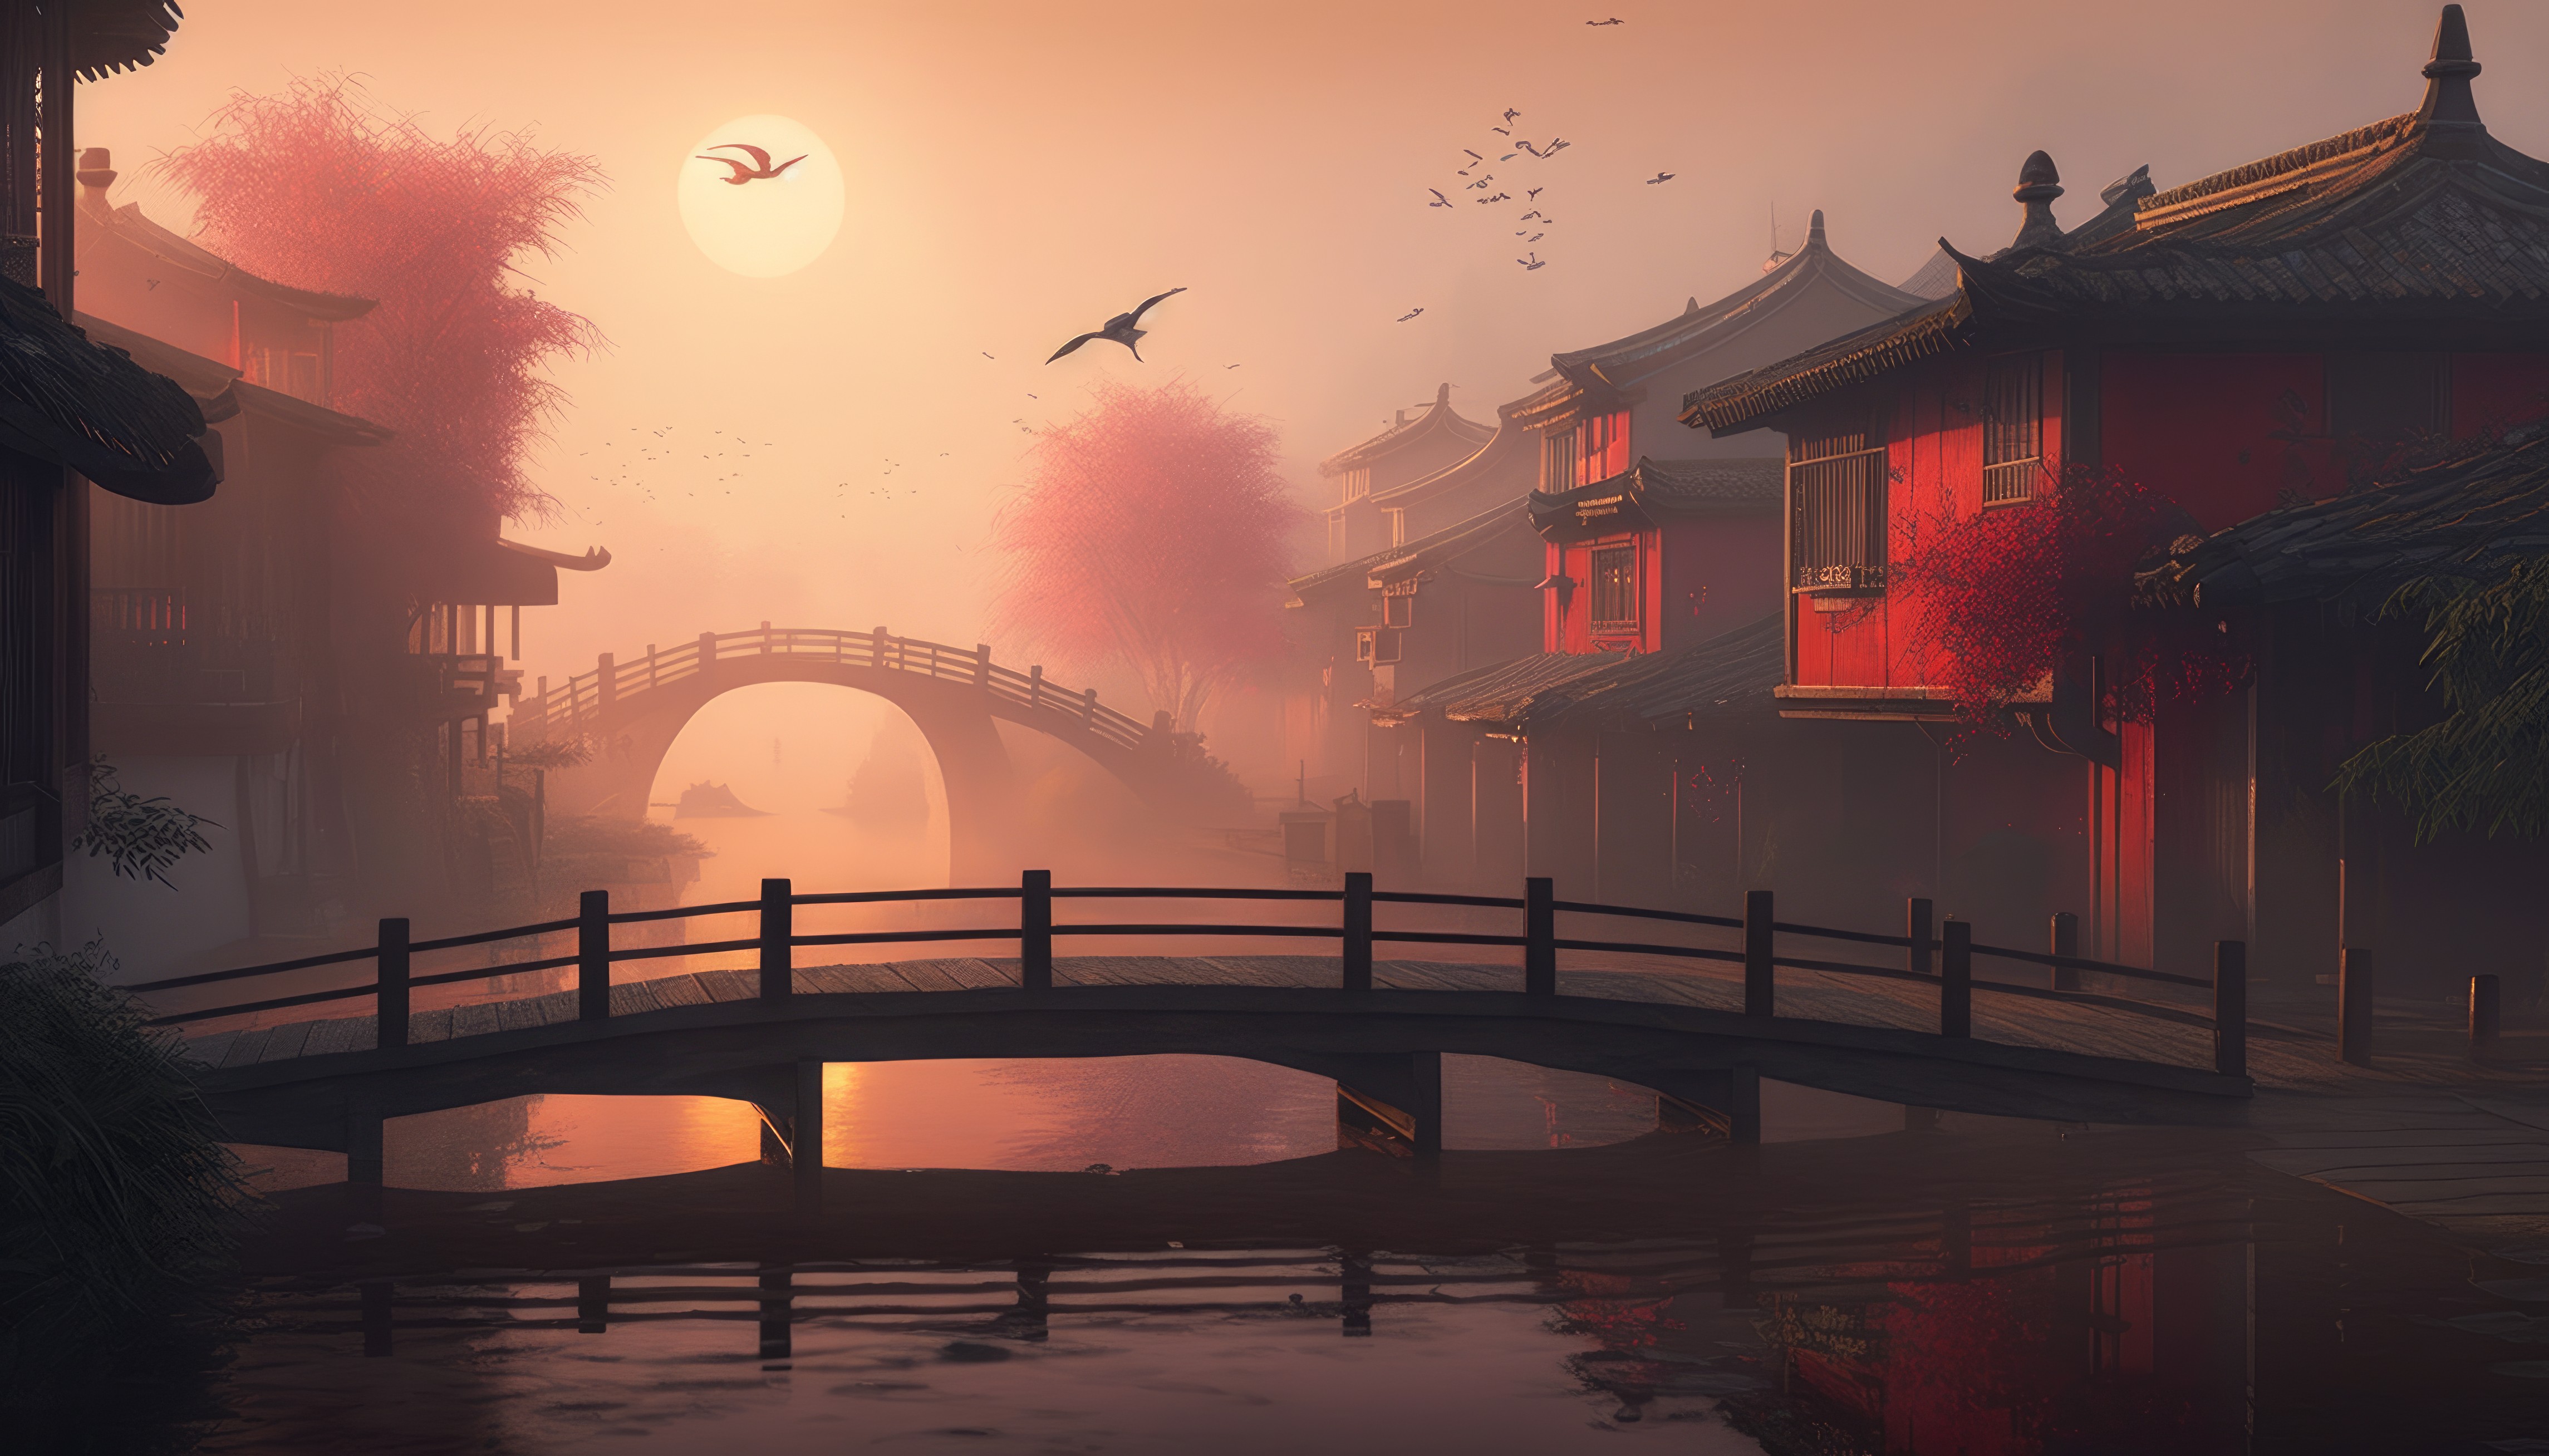 Ai Art Illustration Bridge China Village Sun Birds Water Reflection 4579x2616